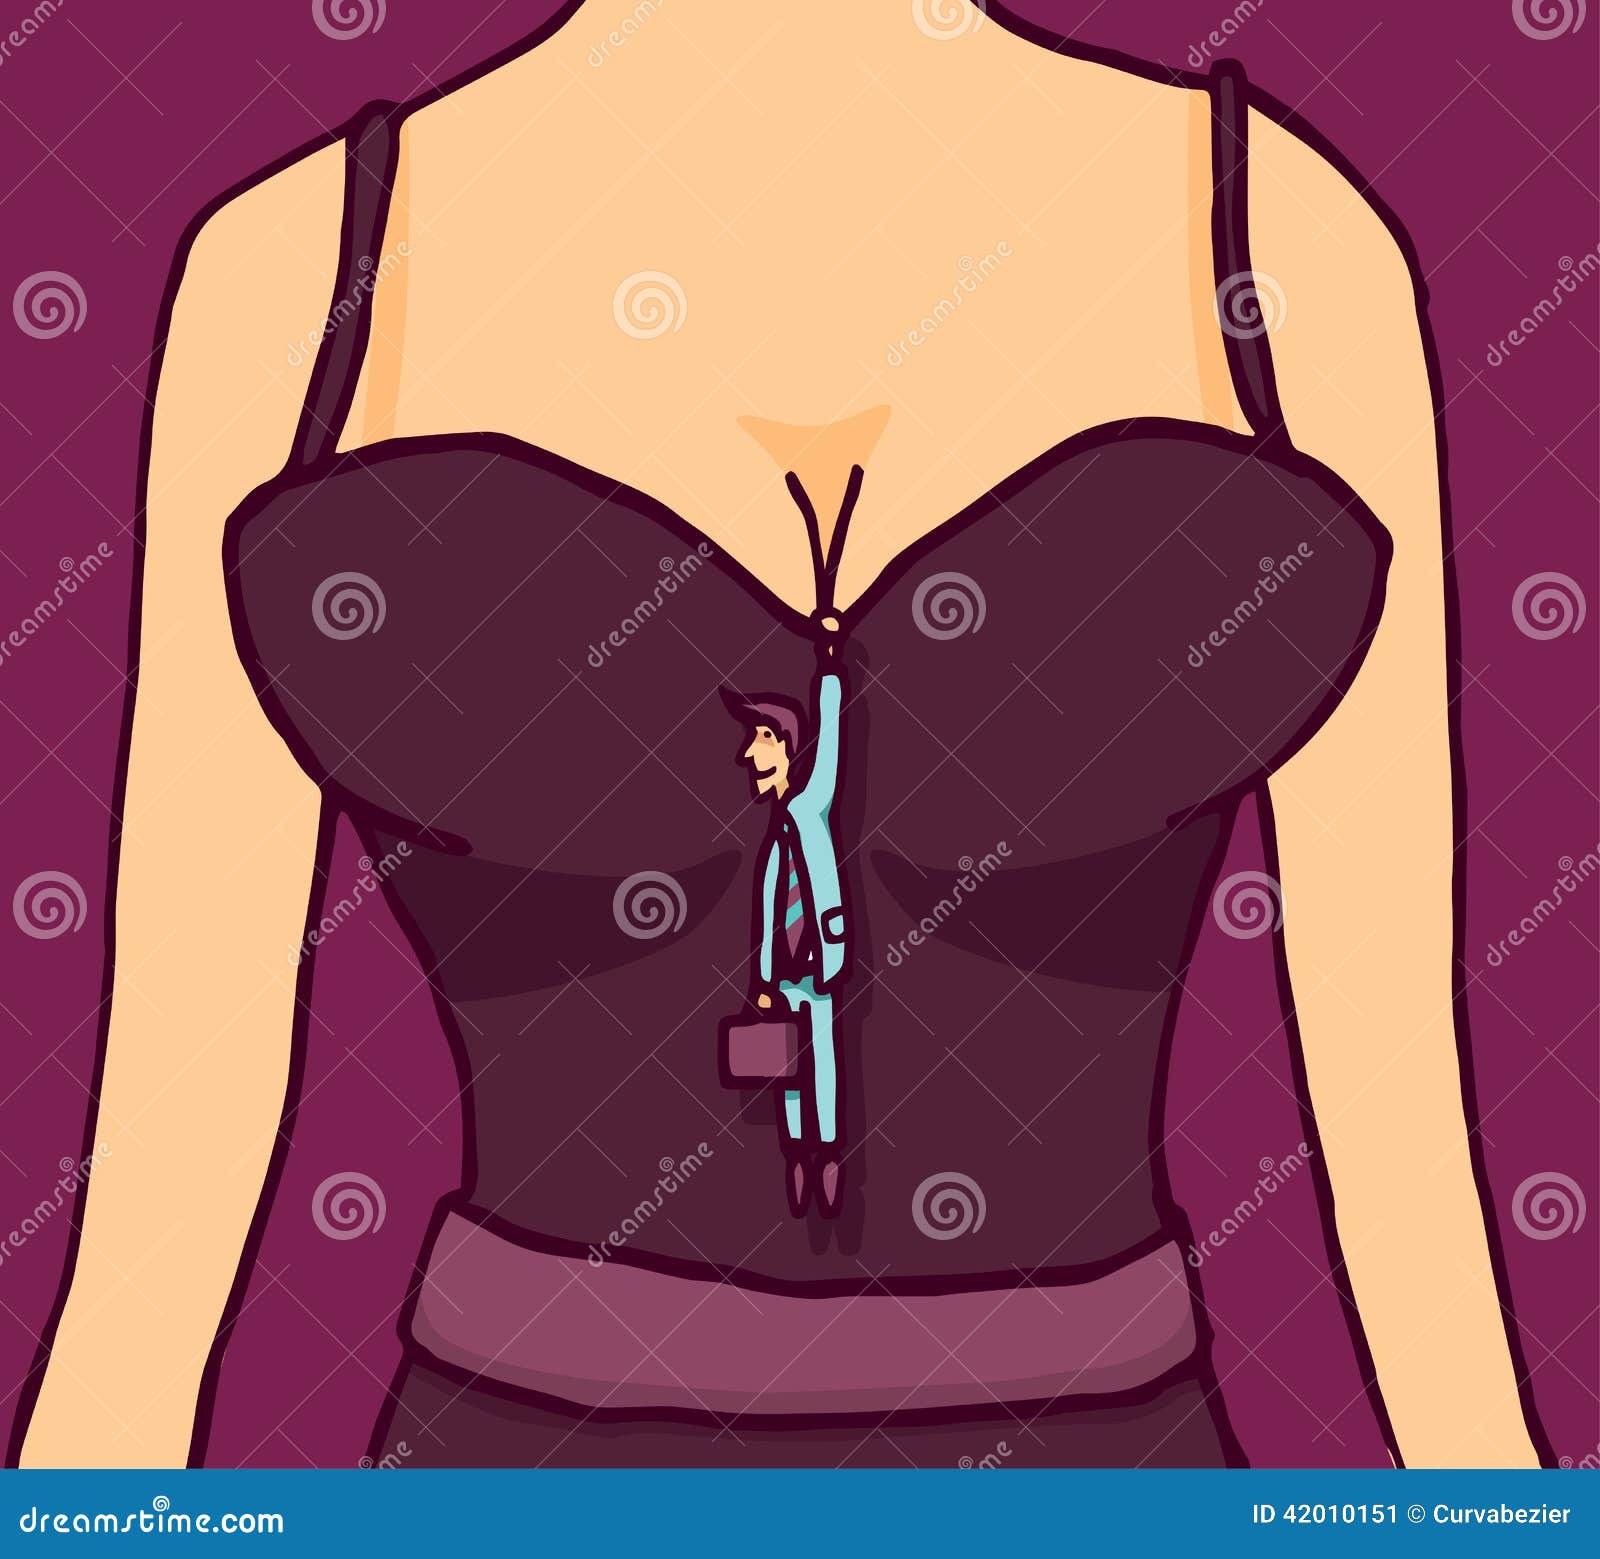 https://thumbs.dreamstime.com/z/man-hanging-cleavage-cartoon-illustration-tiny-businessman-fantasizing-woman-42010151.jpg